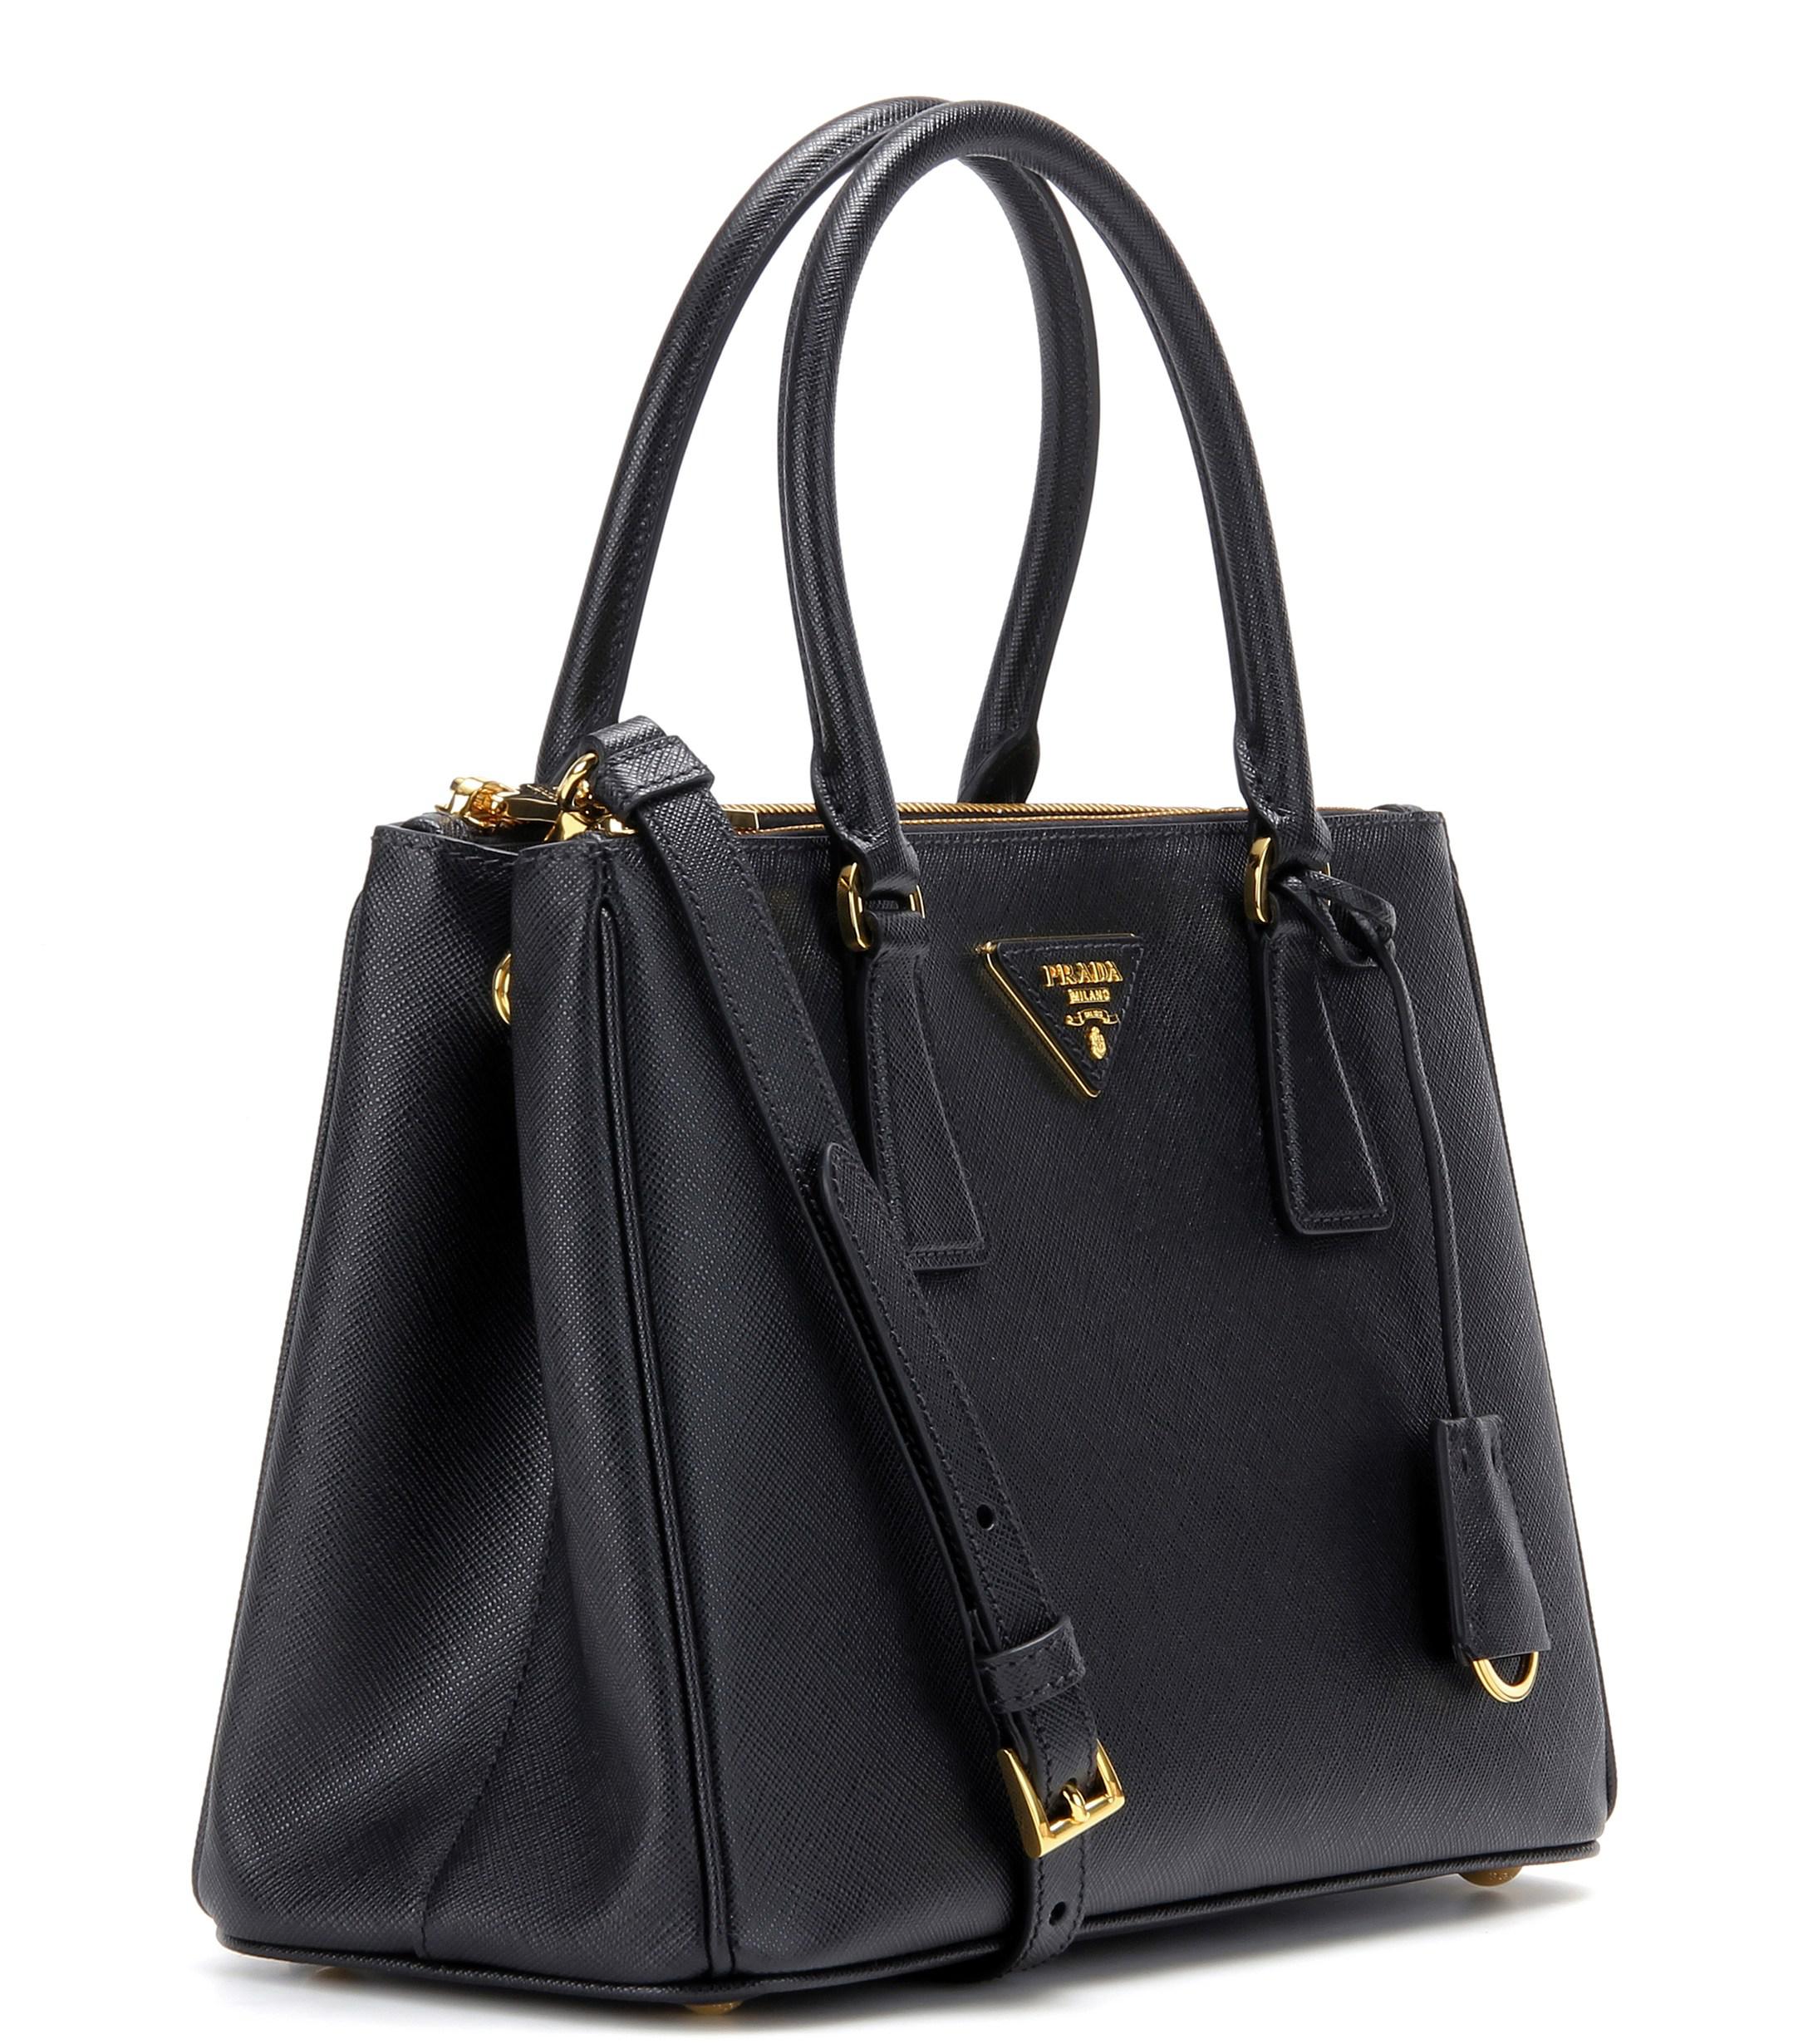 Prada Galleria Saffiano Small Leather Shoulder Bag in Black - Lyst